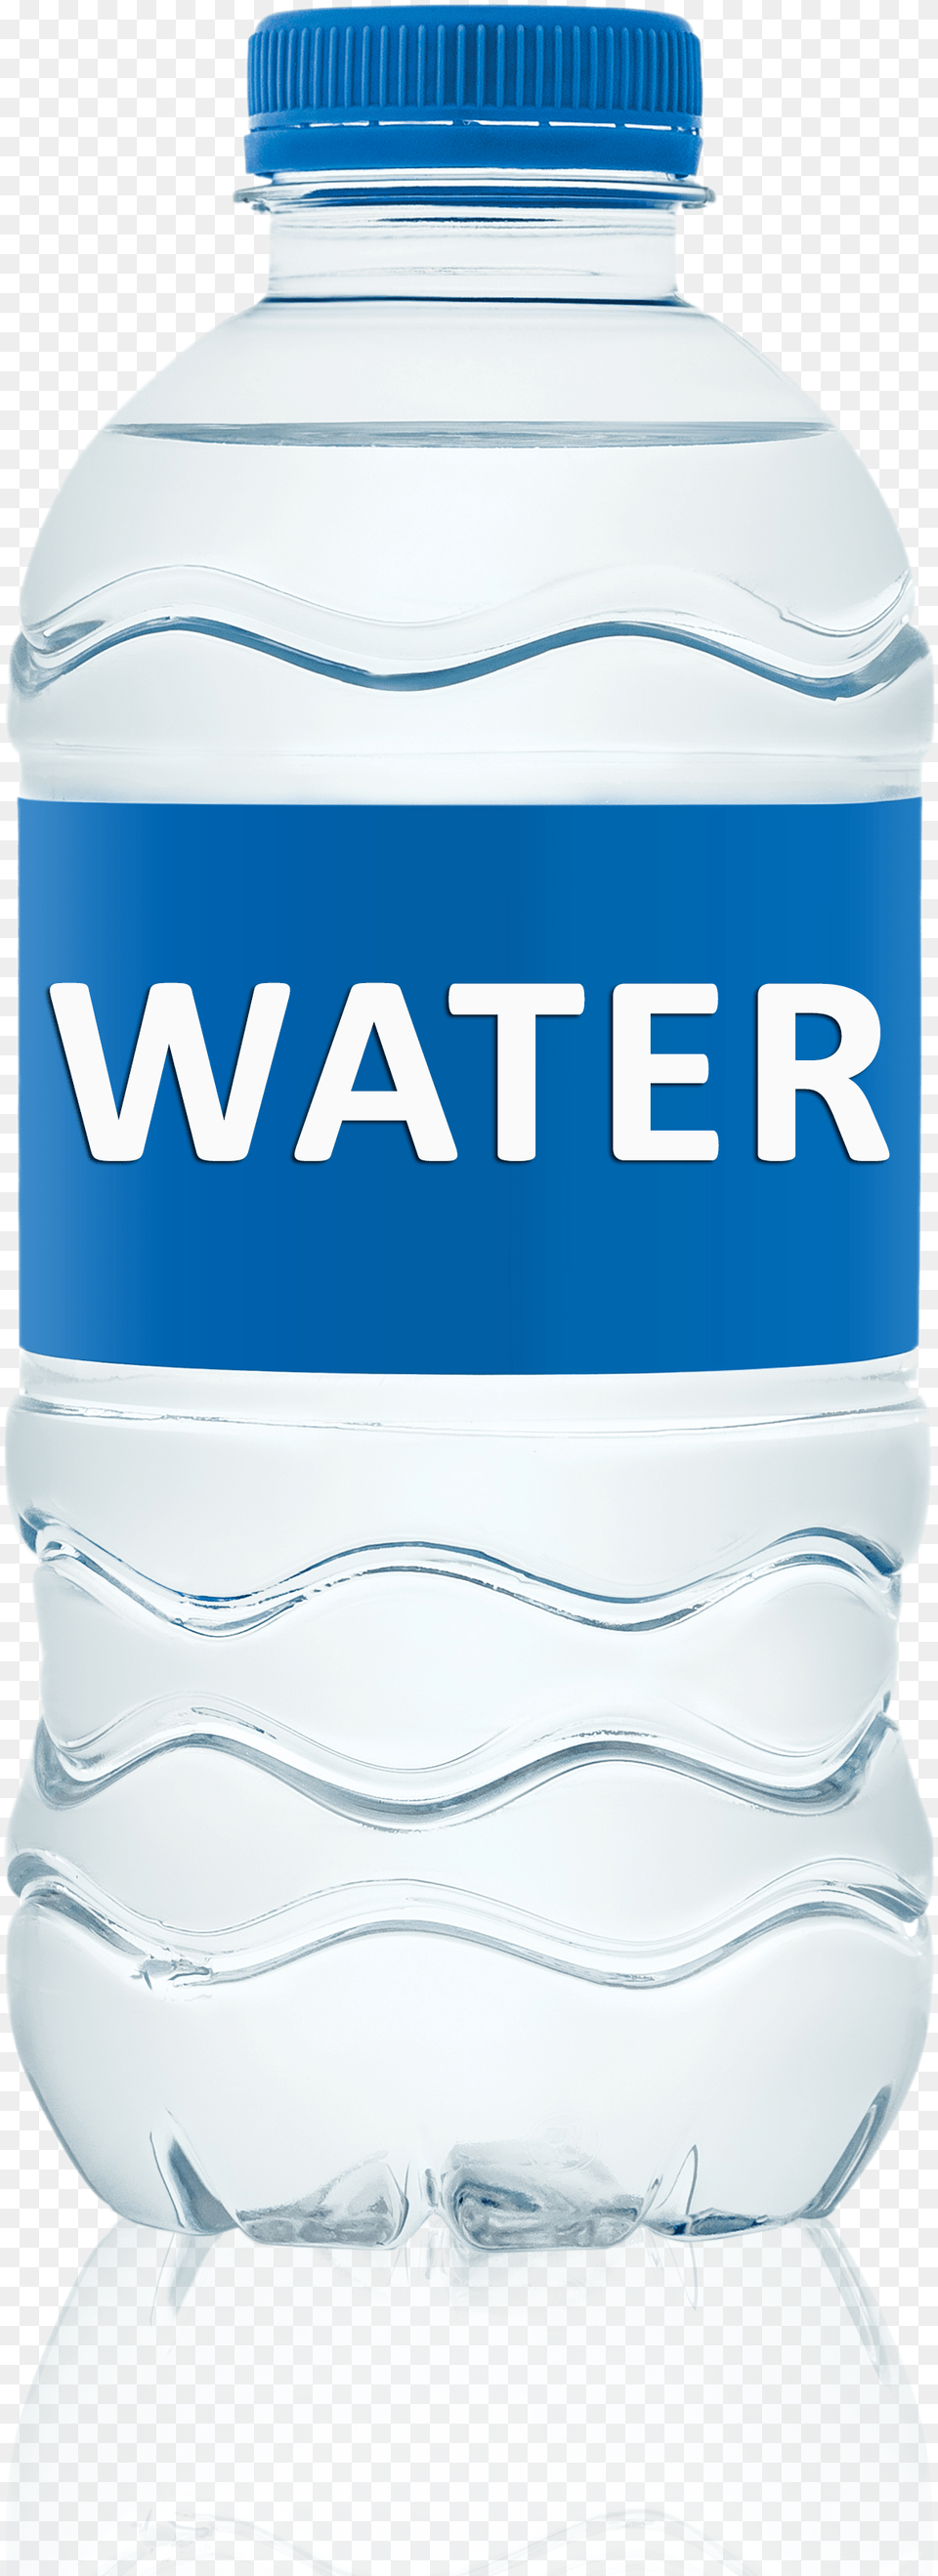 Water Bottle Water Bottle Transparent Background, Beverage, Mineral Water, Water Bottle, Shaker Free Png